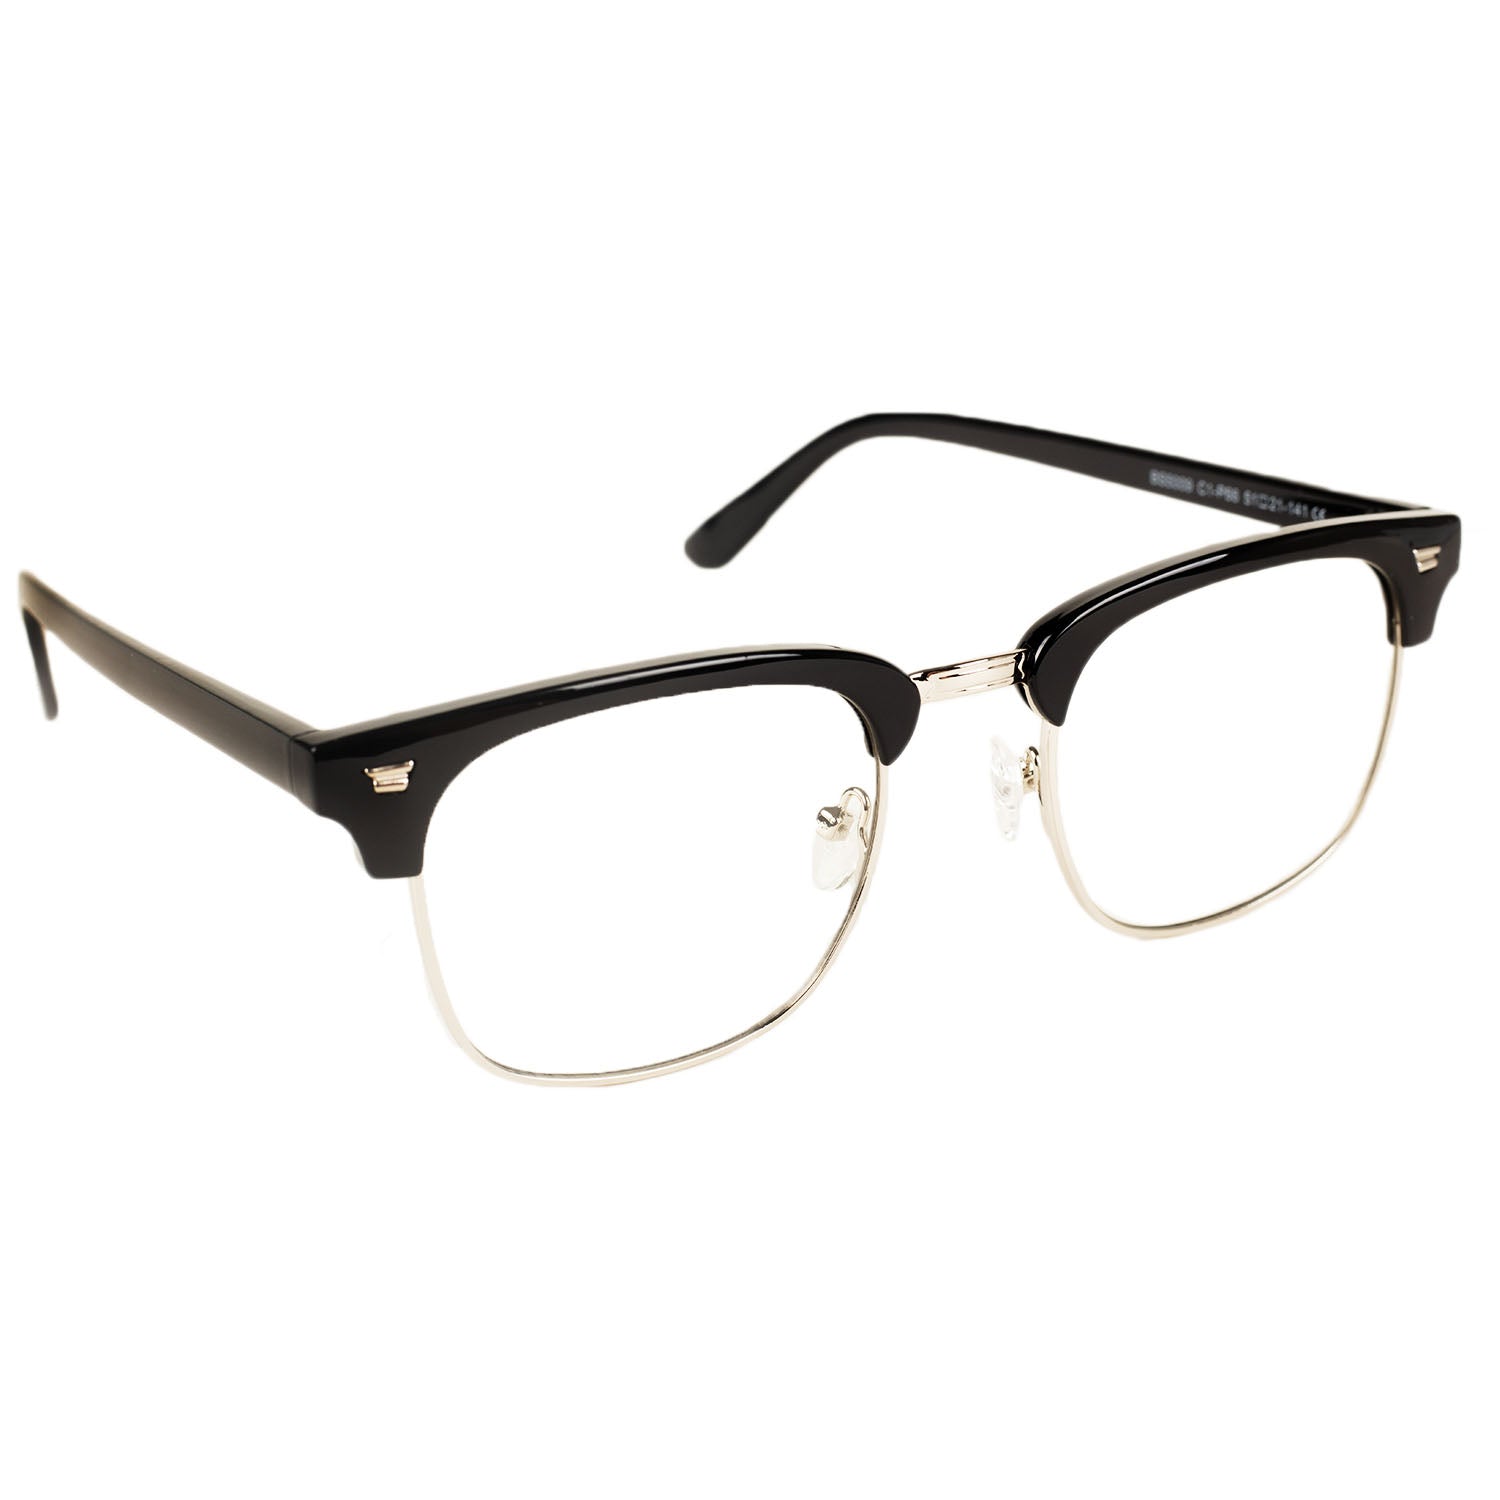 Women's Retro Semi-rimless Classical Fashion Eyewear Clear Lens Eyeglasses